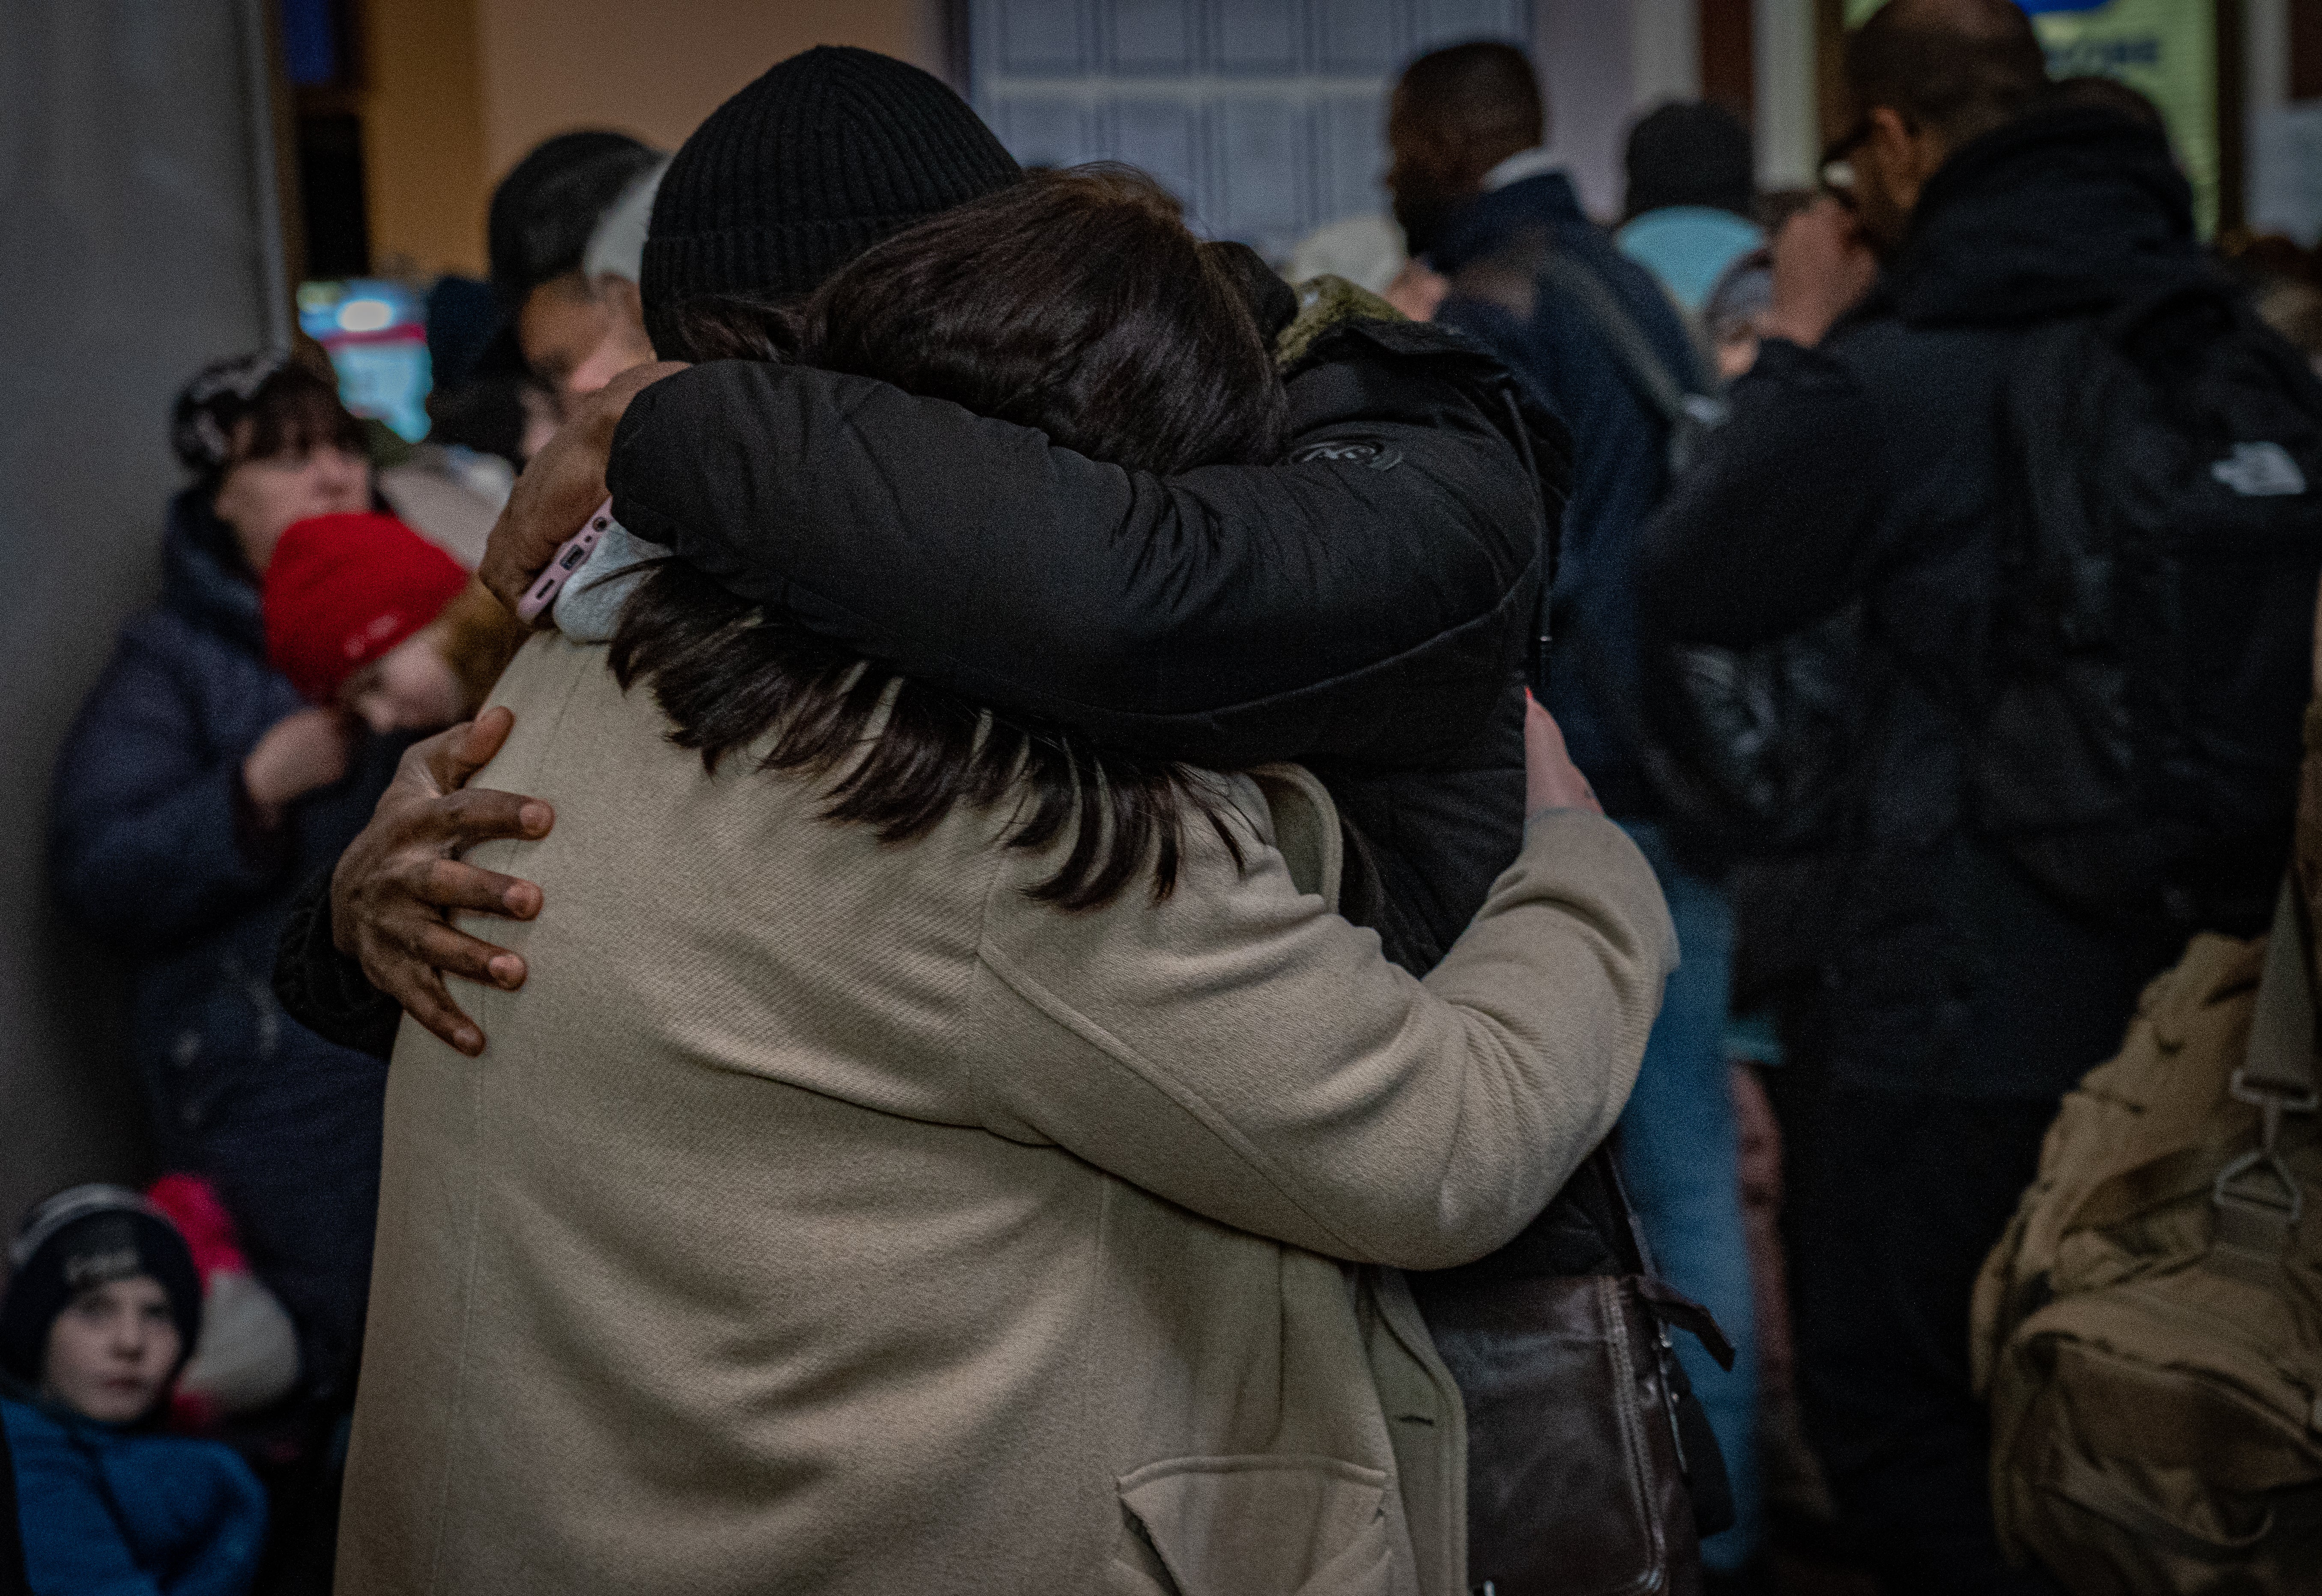 An emotional couple reunite at Lviv station after fleeing war